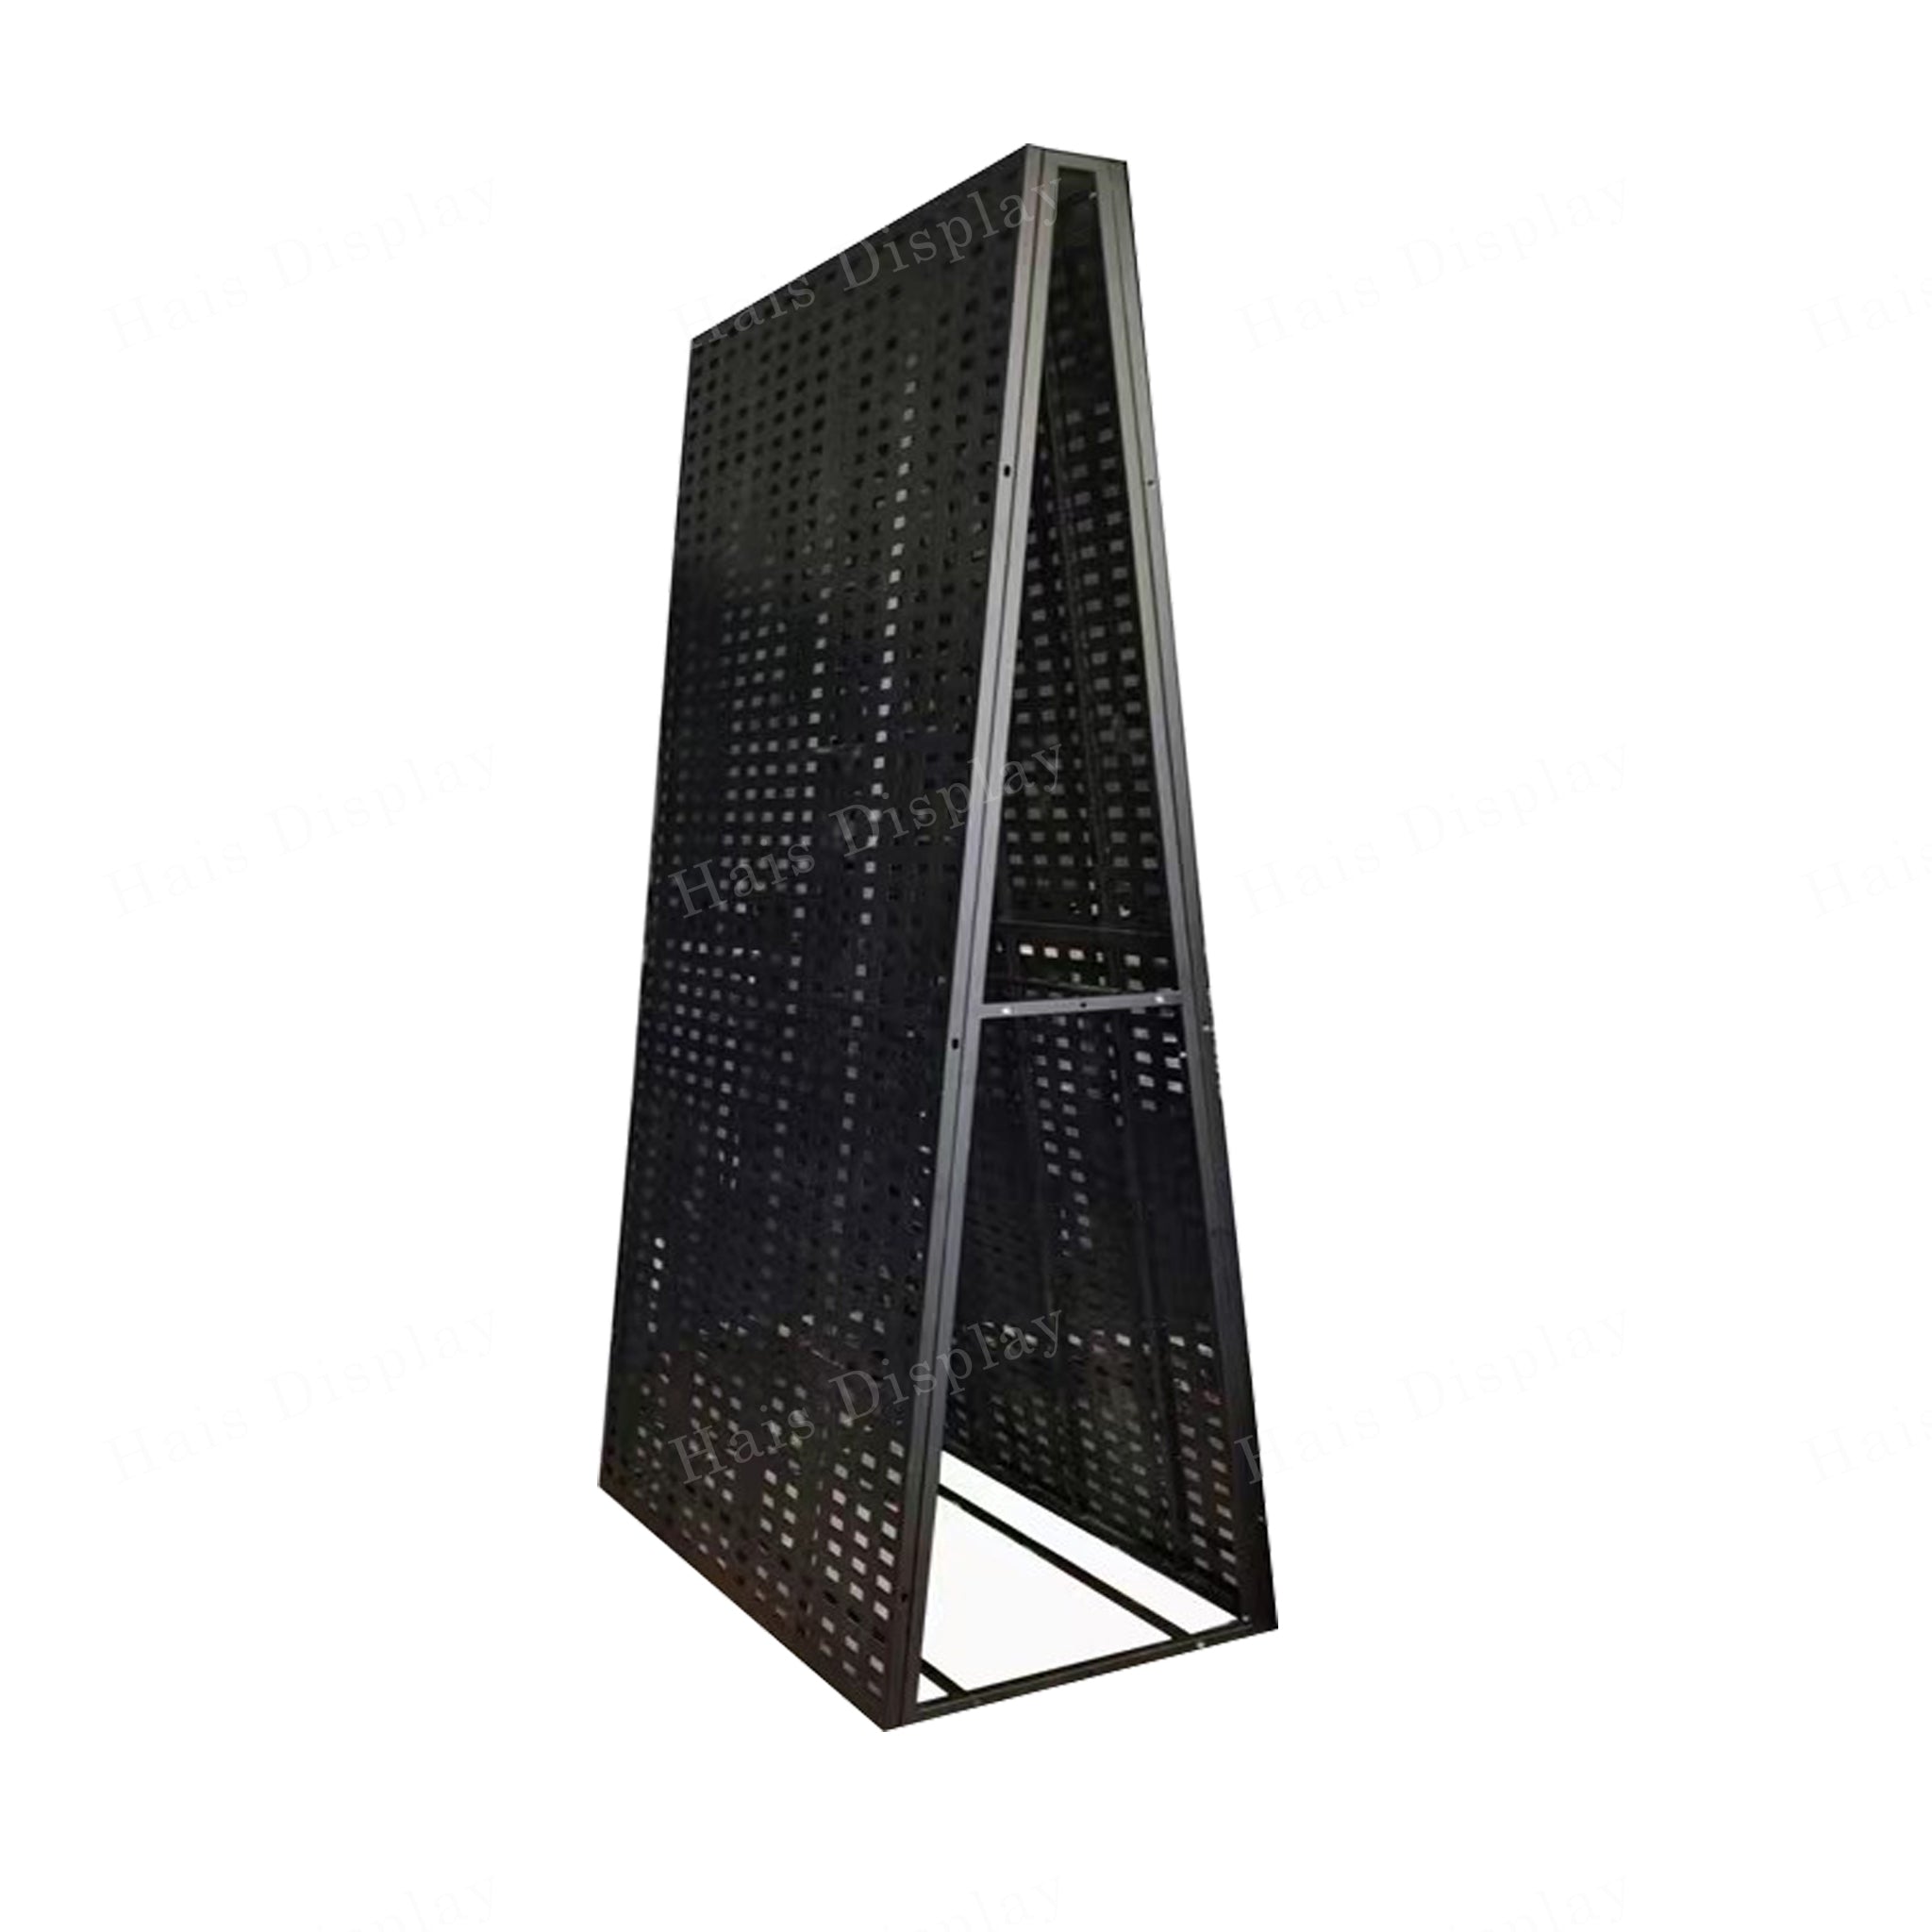 Showroom Tile Display Stand -1200x2450mm - 3sets